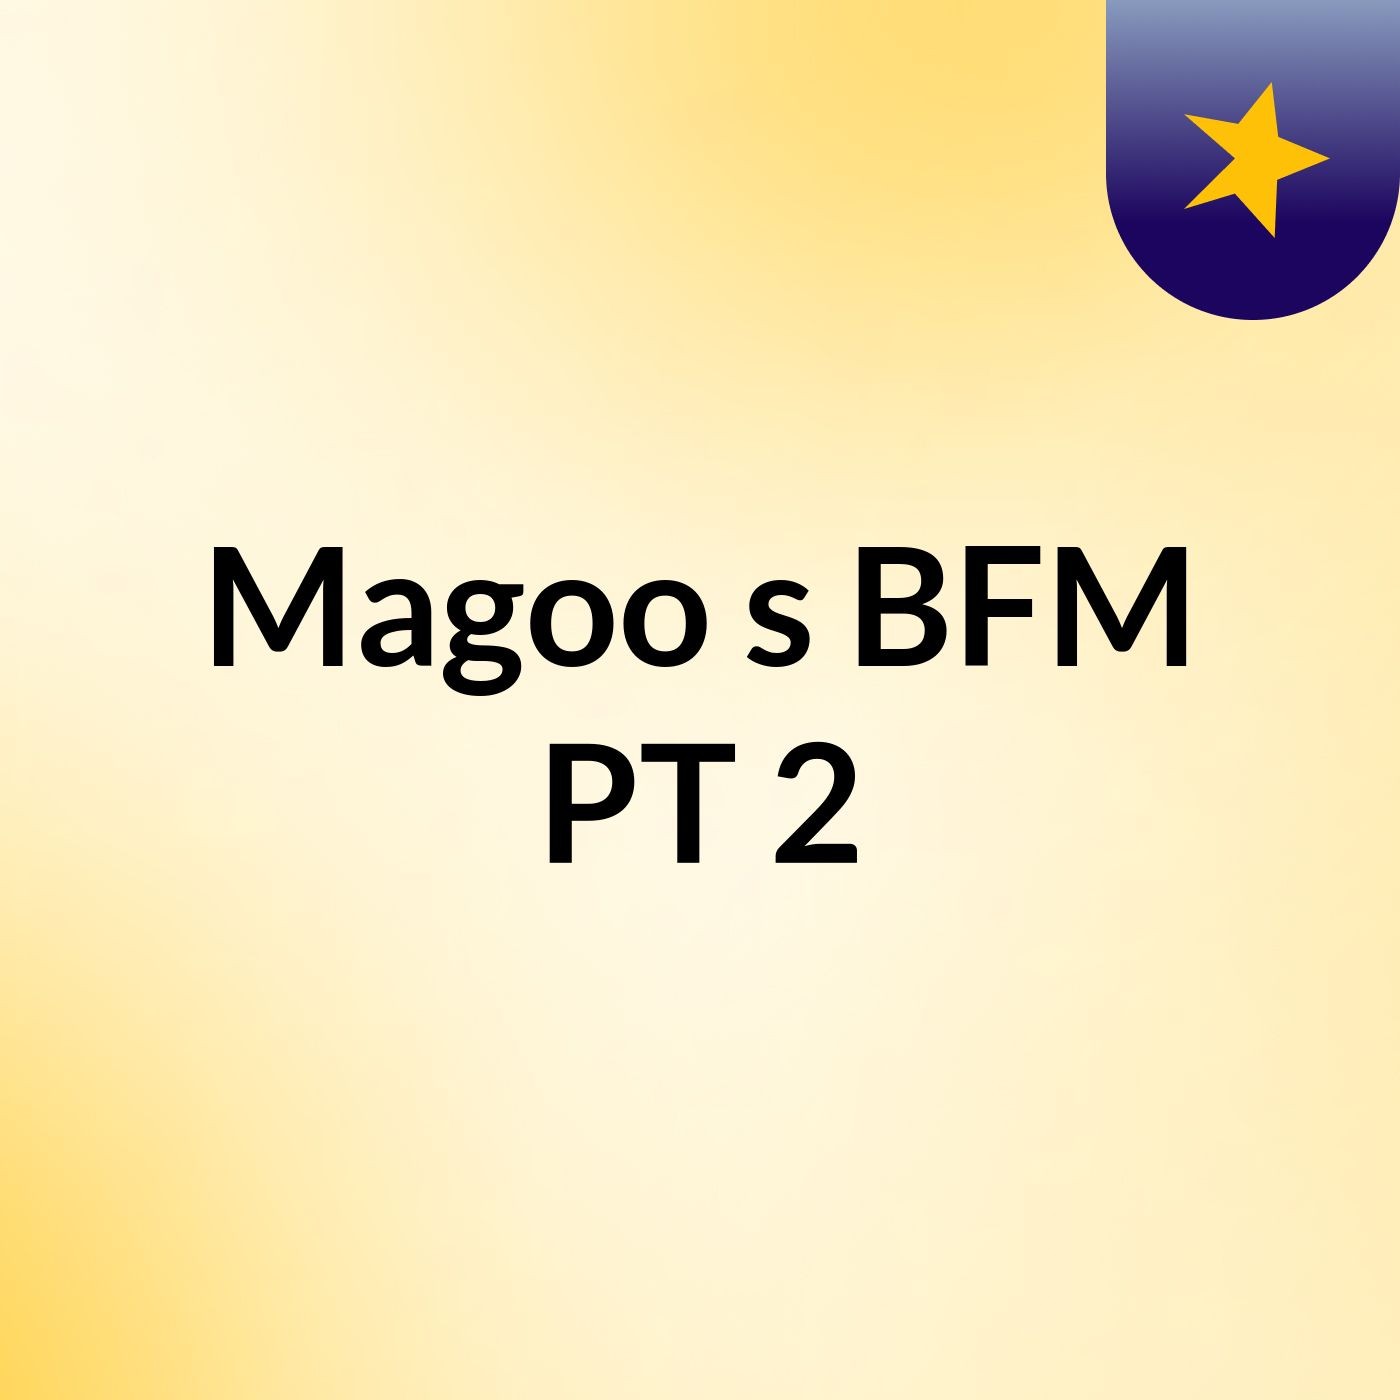 Magoo's BFM PT 2